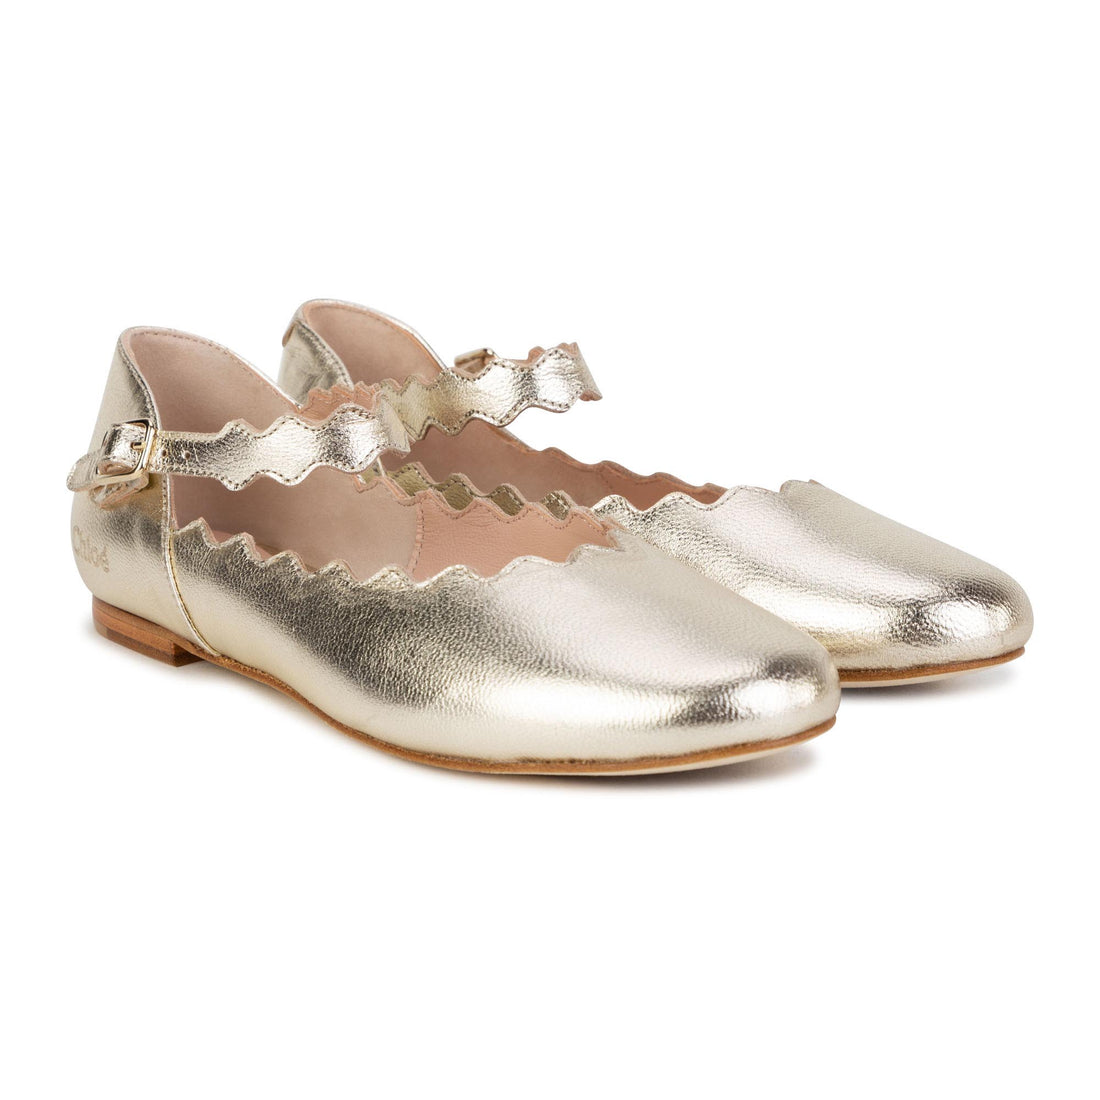 Chloe Light Gold Ballerina Shoes